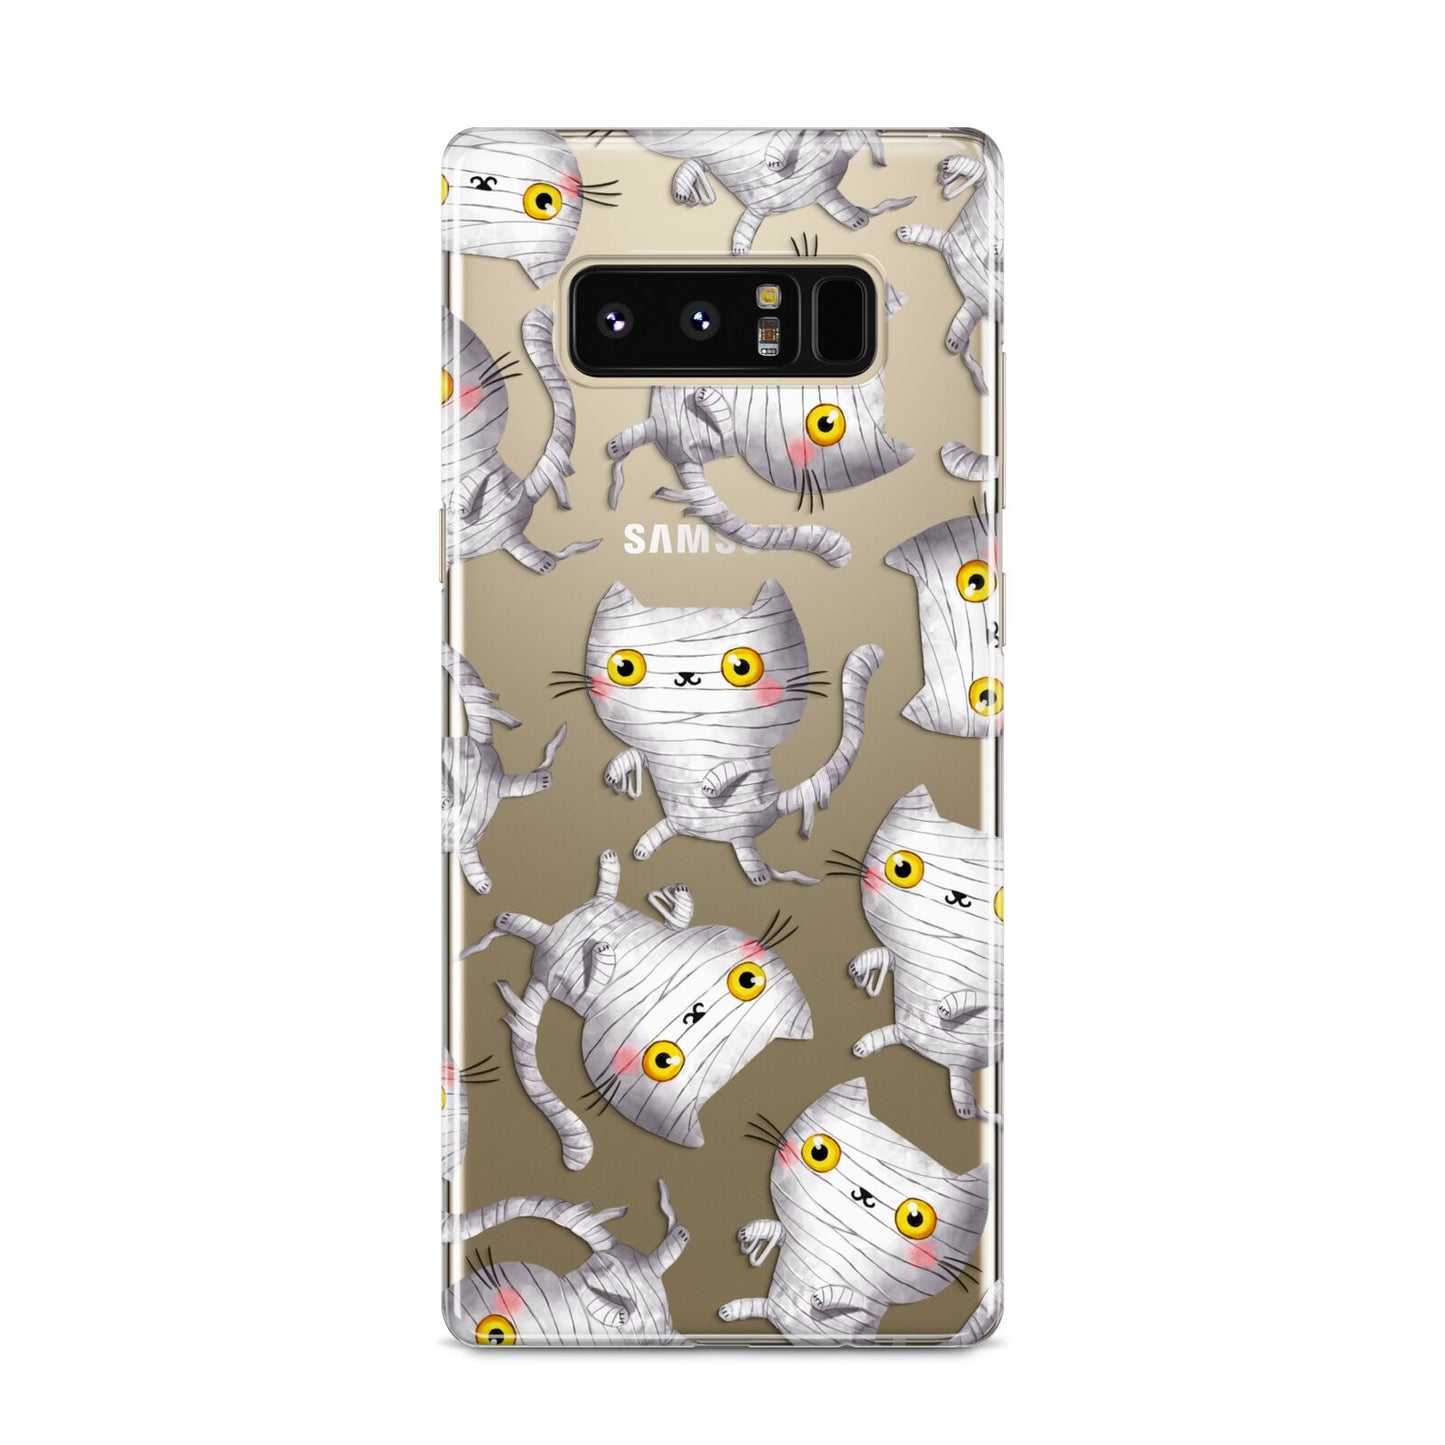 Mummy Cats Samsung Galaxy S8 Case